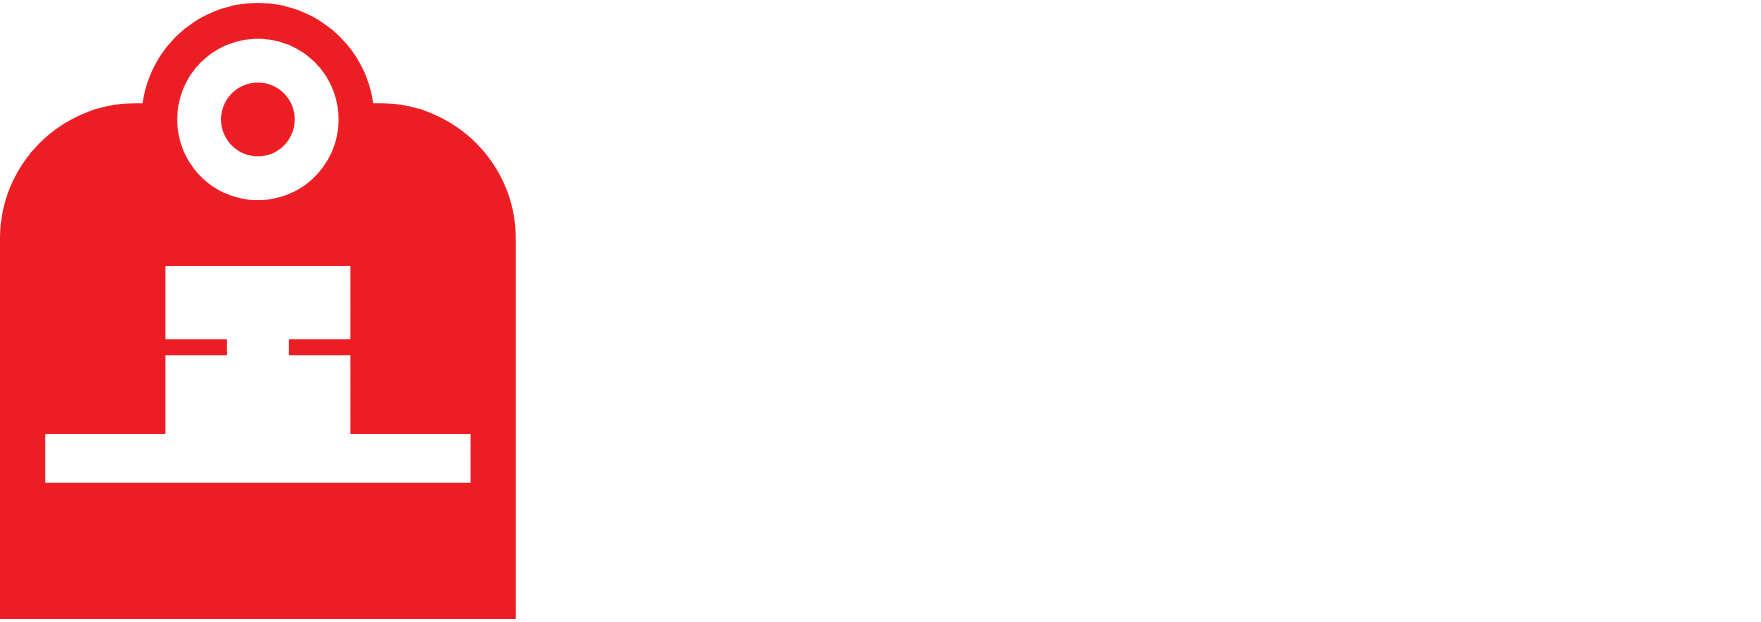 Indian Railway Finance logo large for dark backgrounds (transparent PNG)